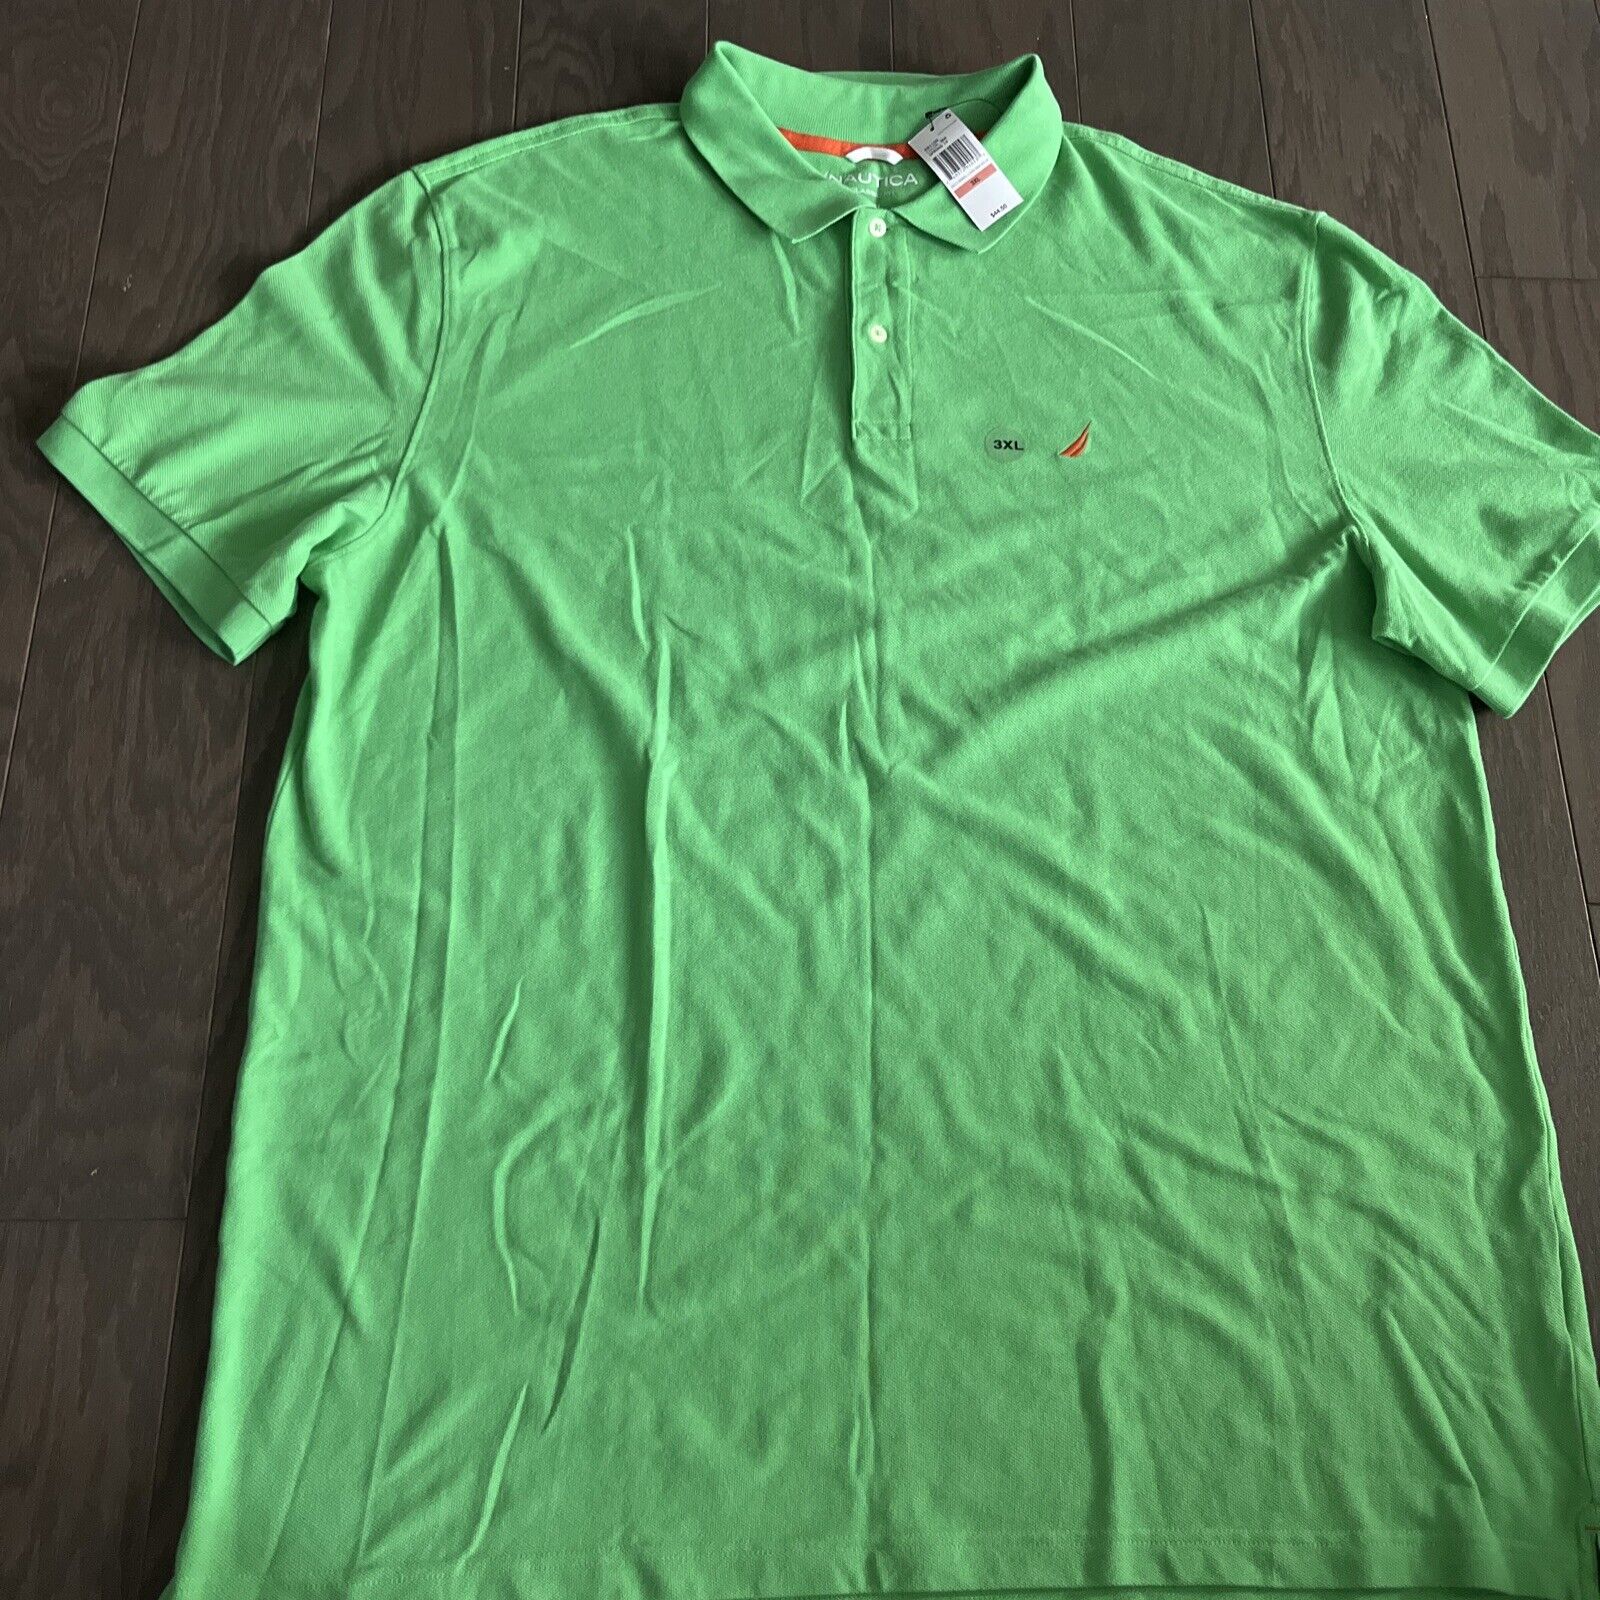 NWT Nautica Mens Classic Fit Green Short Sleeve Solid Cotton Polo 3XL XXXL  $45 | eBay